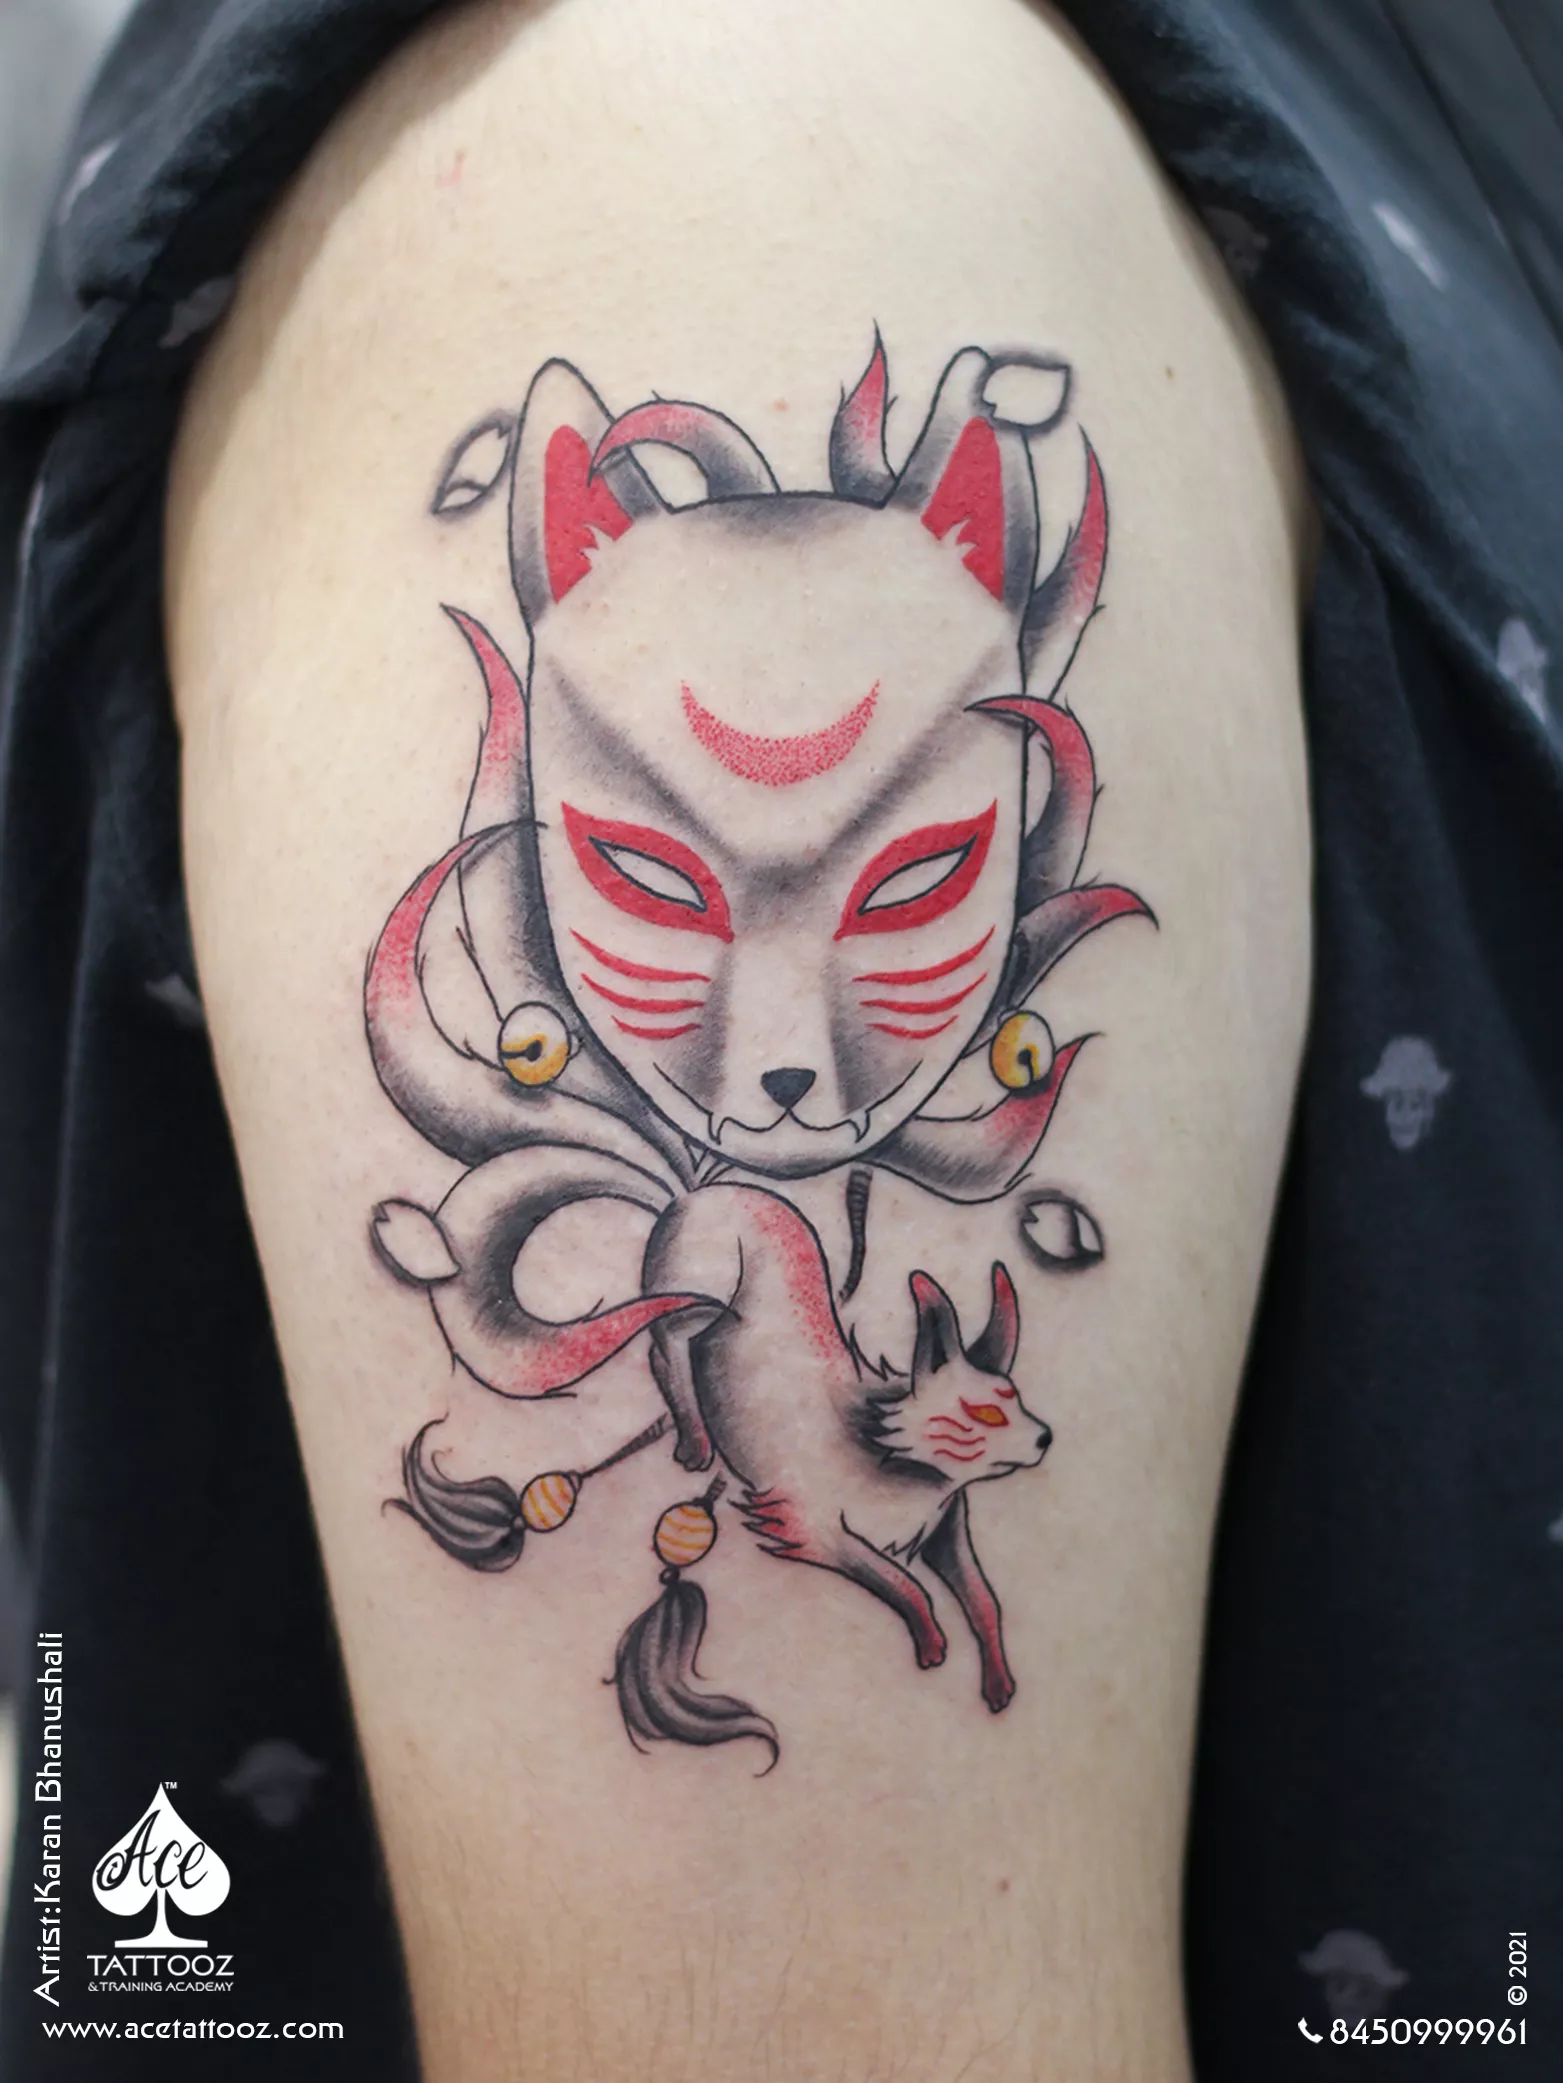 RunCatRun Design Studio on Twitter Our Kitsune Cat Tattoo design as a  tattoo done by Diane Instagram dtrinitytattoo tattoo ink inktattoo  cattattoo kitsune kitsunetattoo fox foxtattoo runcatrundesign cat  kitten floral 